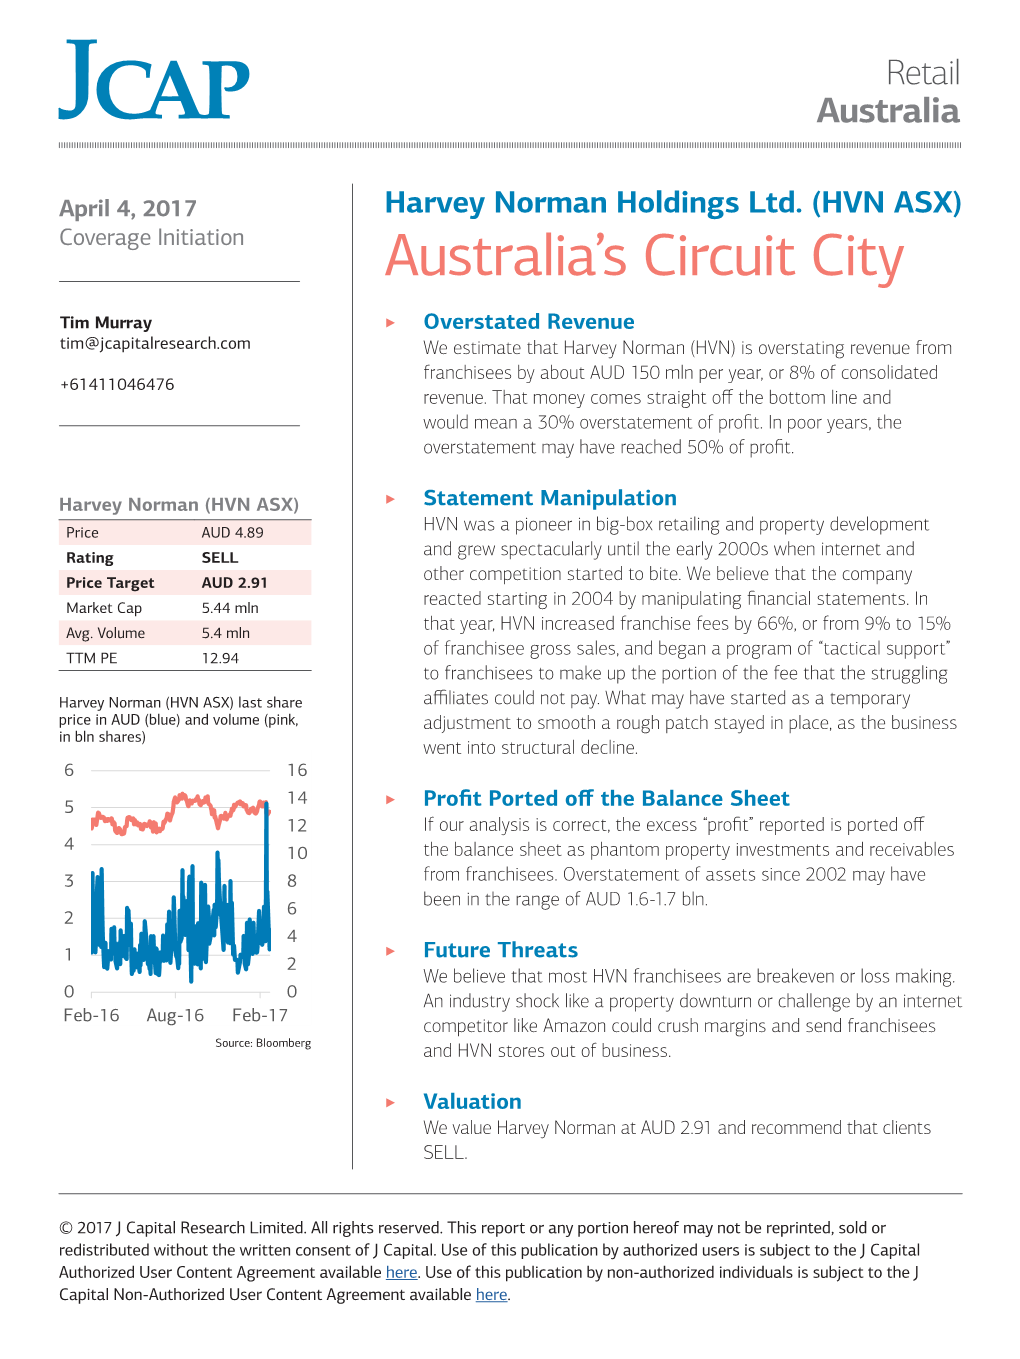 Harvey Norman Holdings Ltd. (HVN ASX) Coverage Initiation Australia’S Circuit City